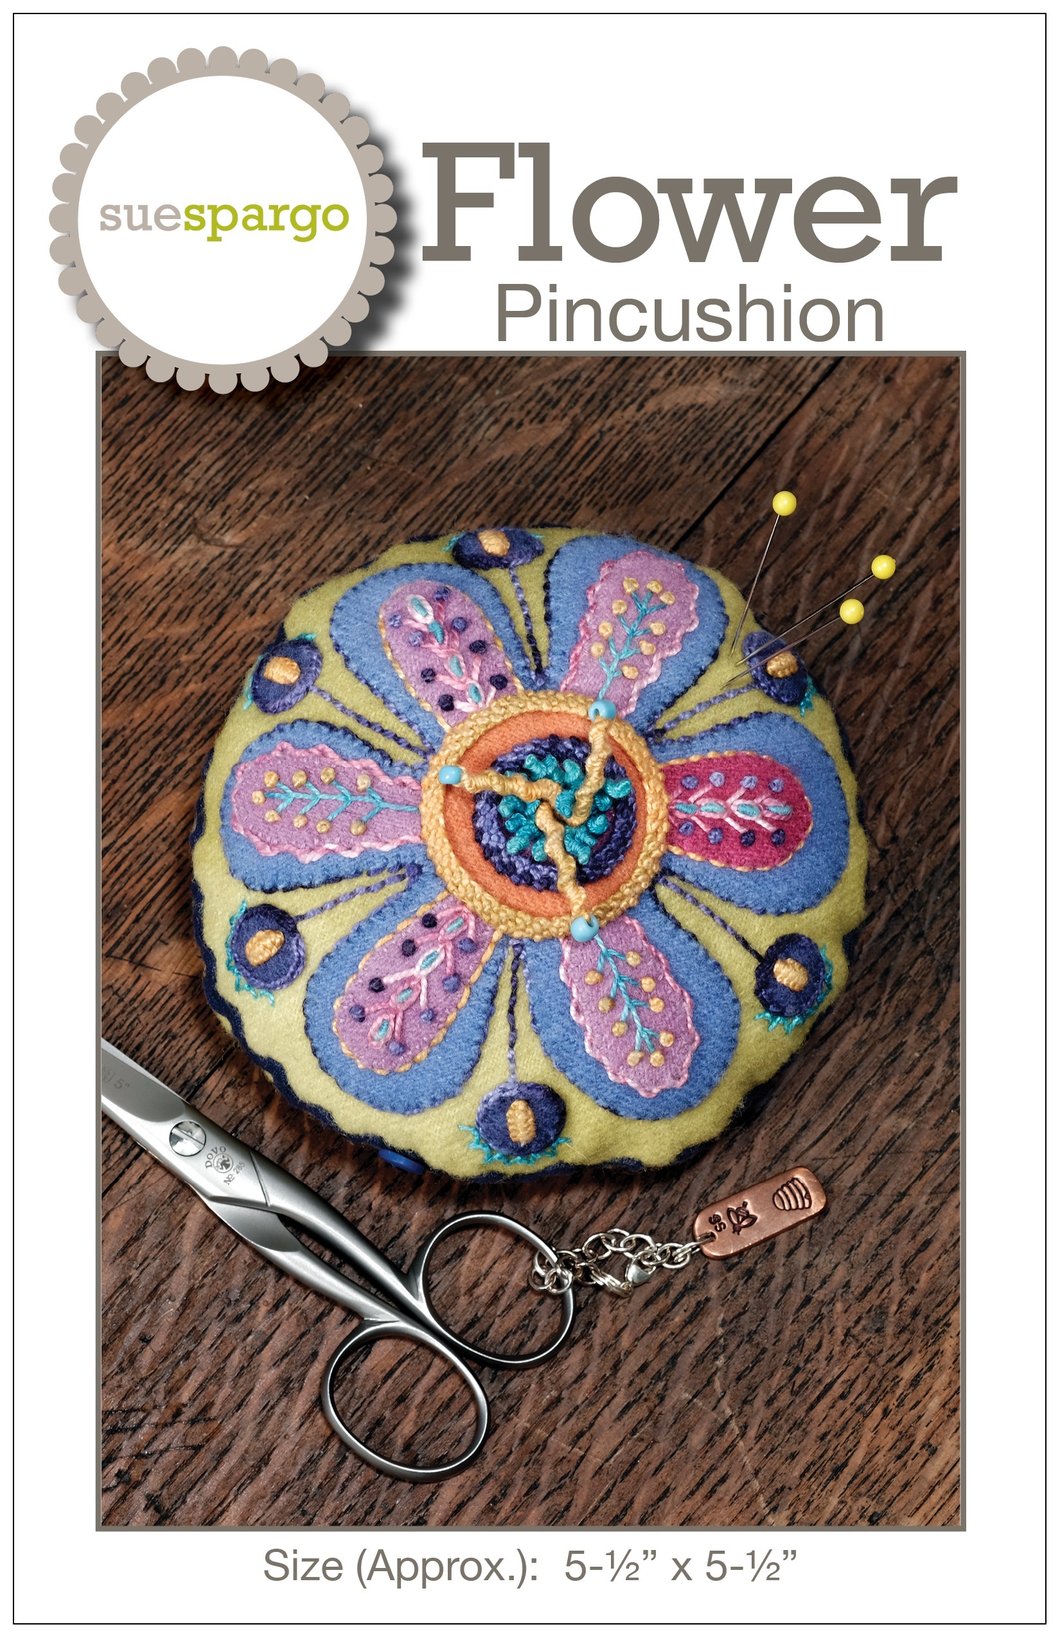 Flower Pincushion Kit - Wool Felt Embroidery - Sue Spargo